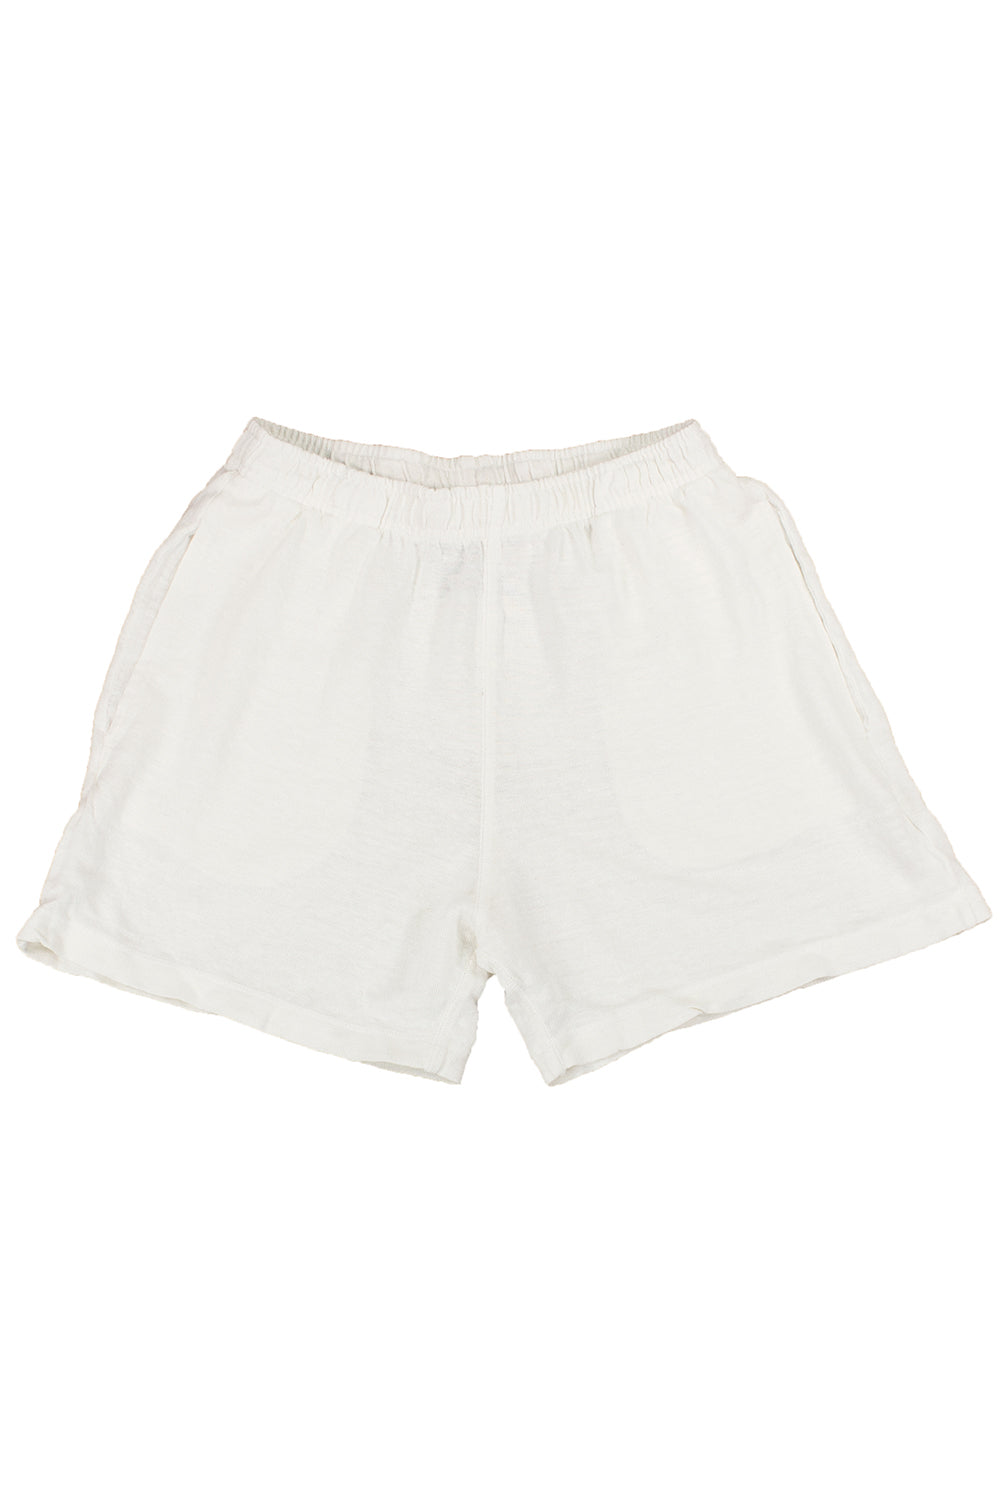 Kona 100% Hemp Short | Jungmaven Hemp Clothing & Accessories / Color: Washed White